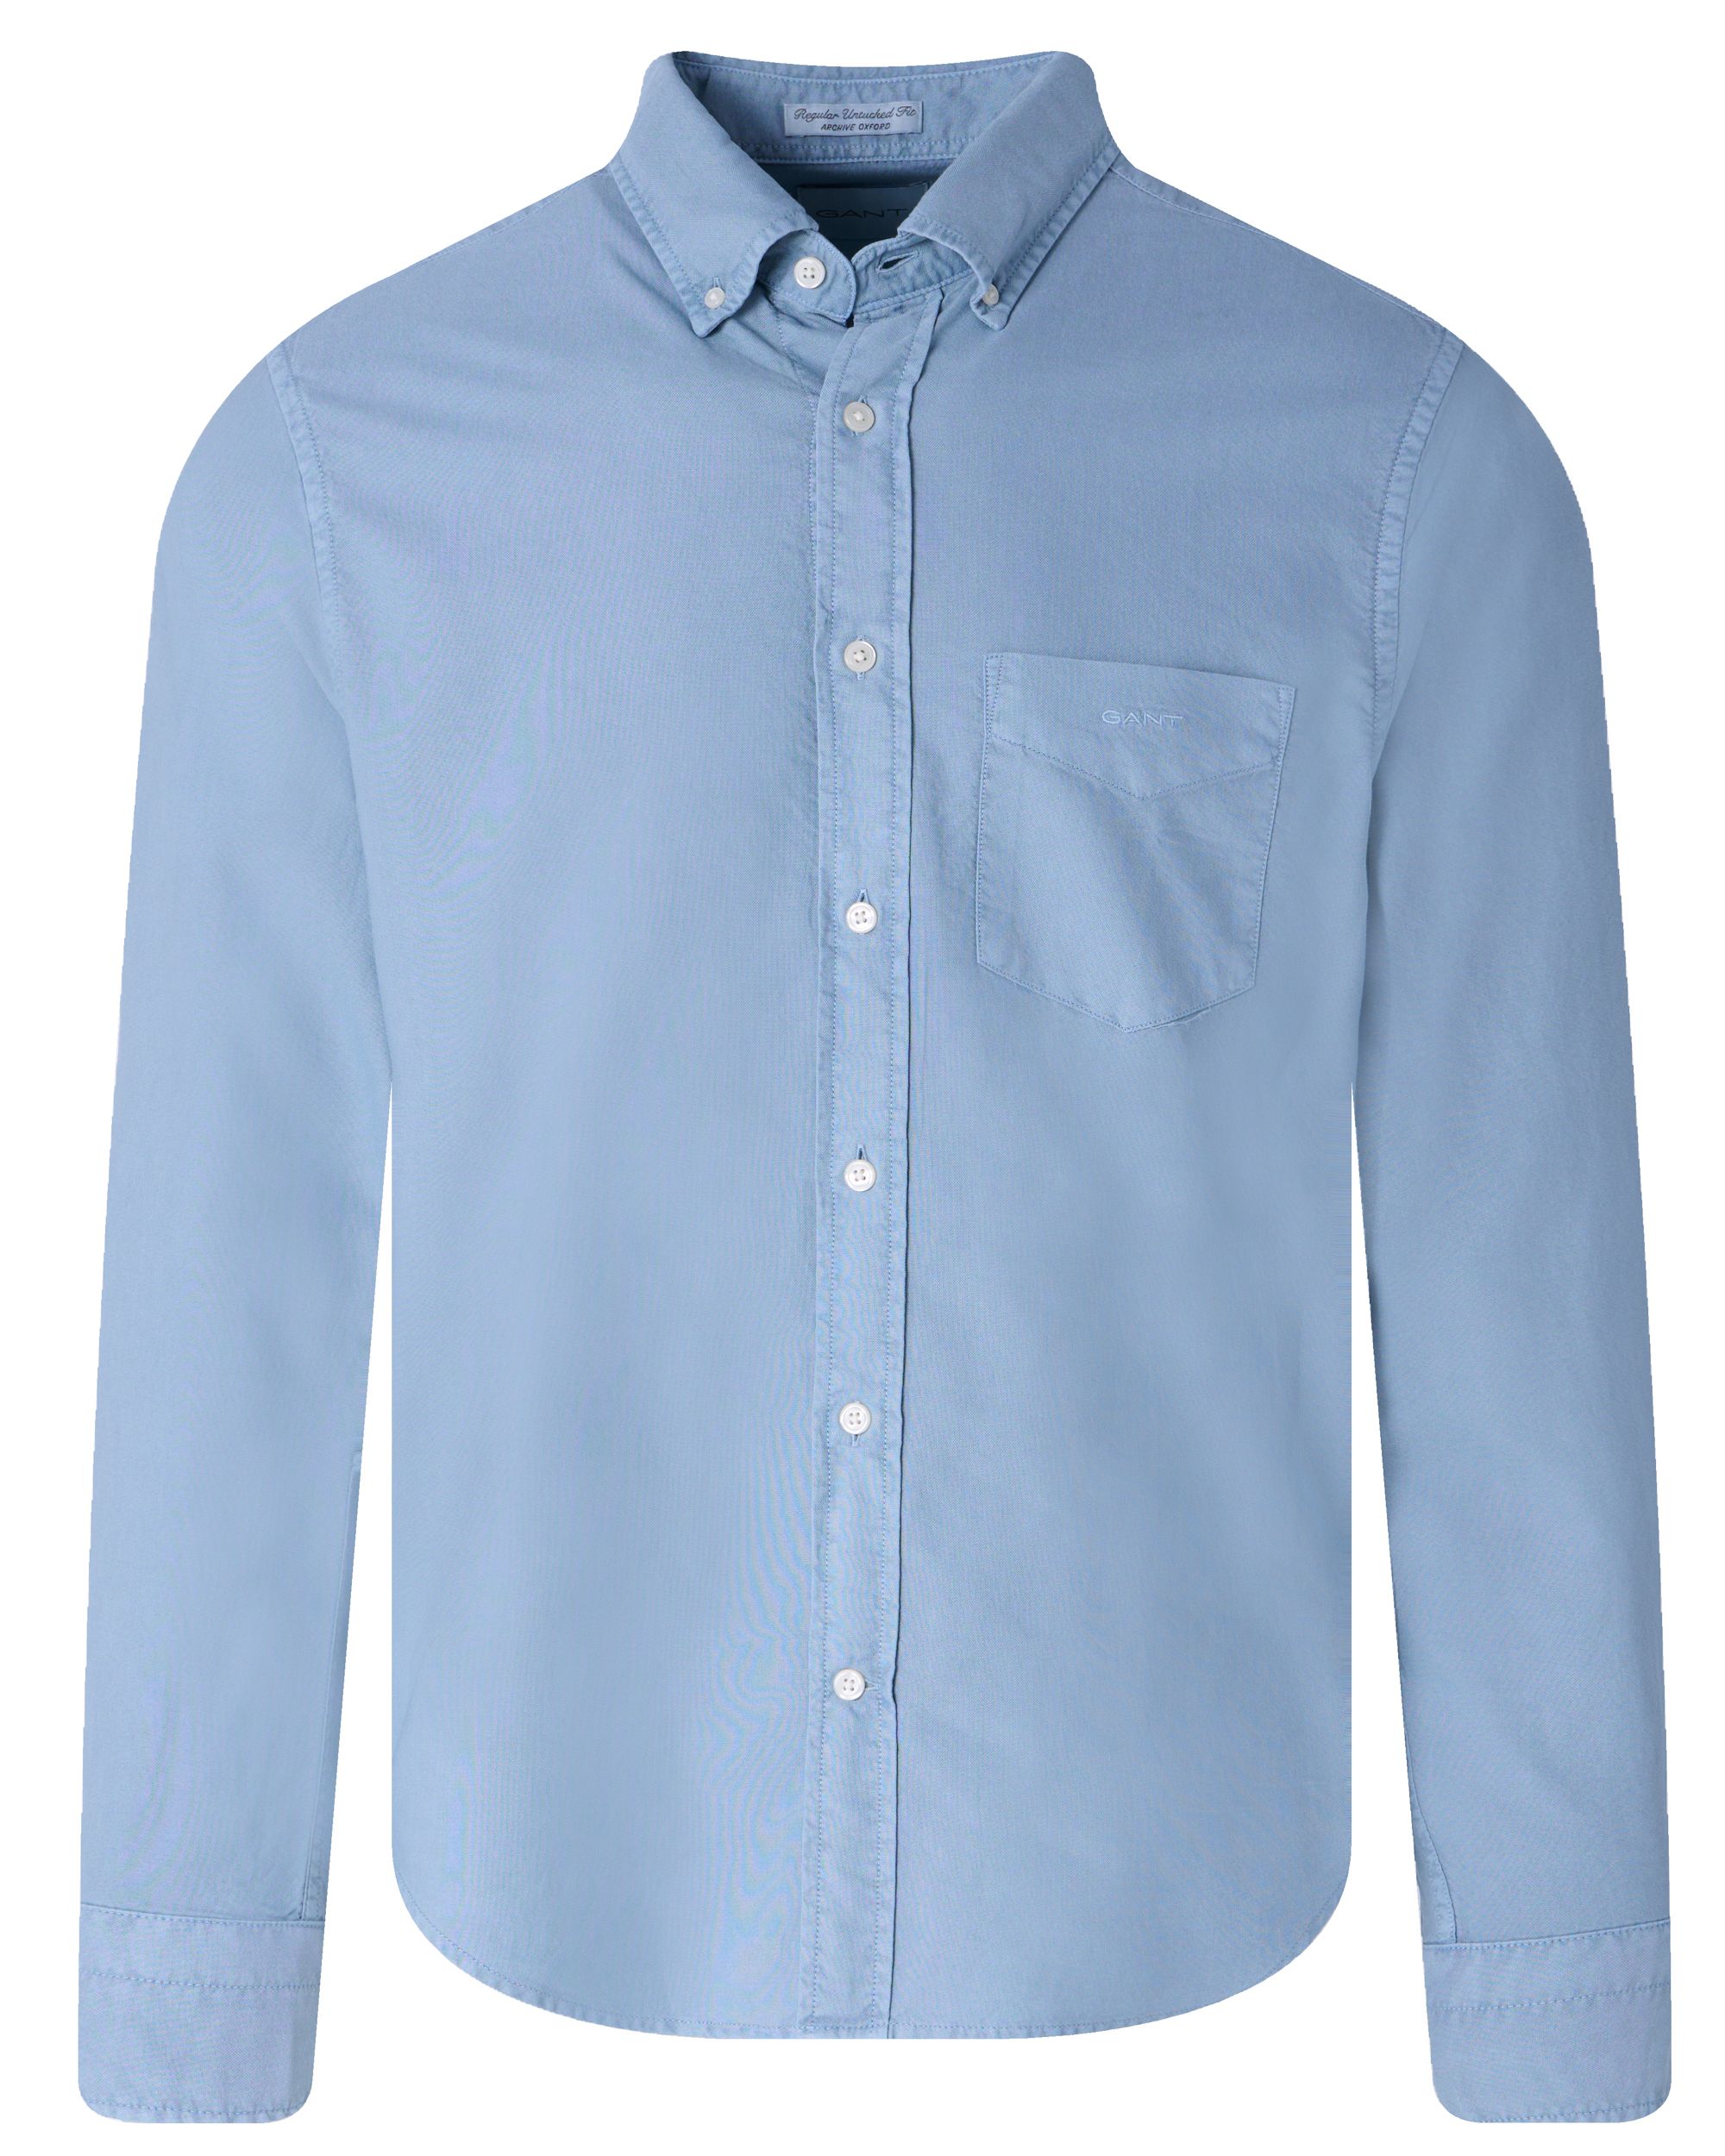 GANT Casual Overhemd LM Blauw 091621-001-L